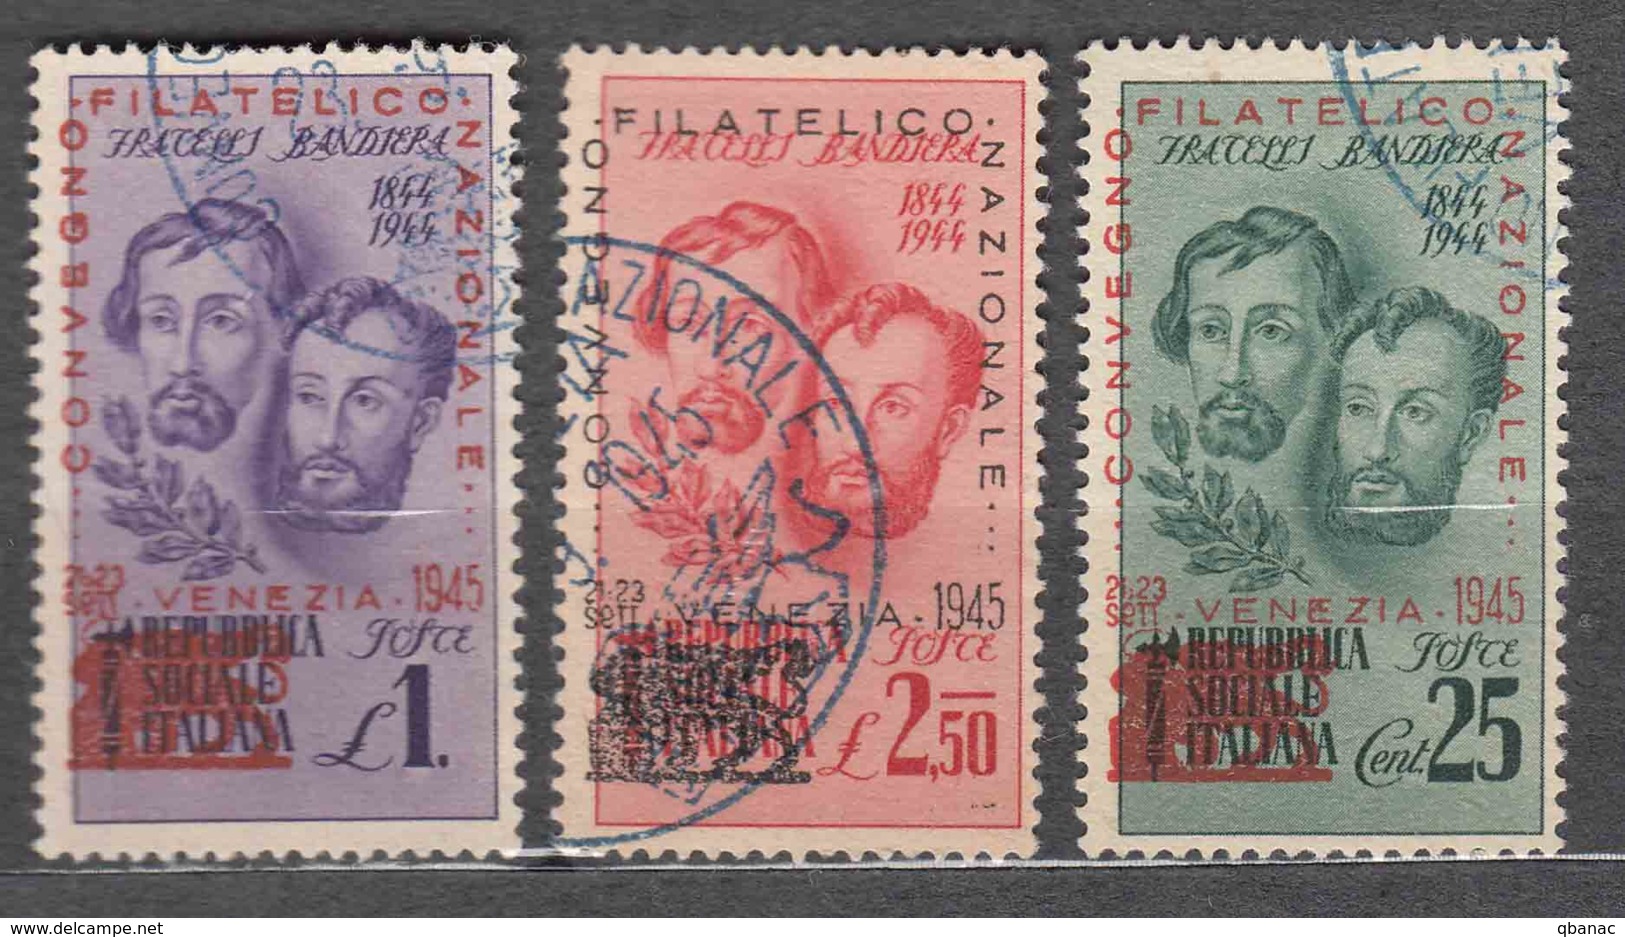 Italy 1945, Philatelic Exibition Venezia Stamps Overprint, Fratelli Bandiera, Used - Oblitérés